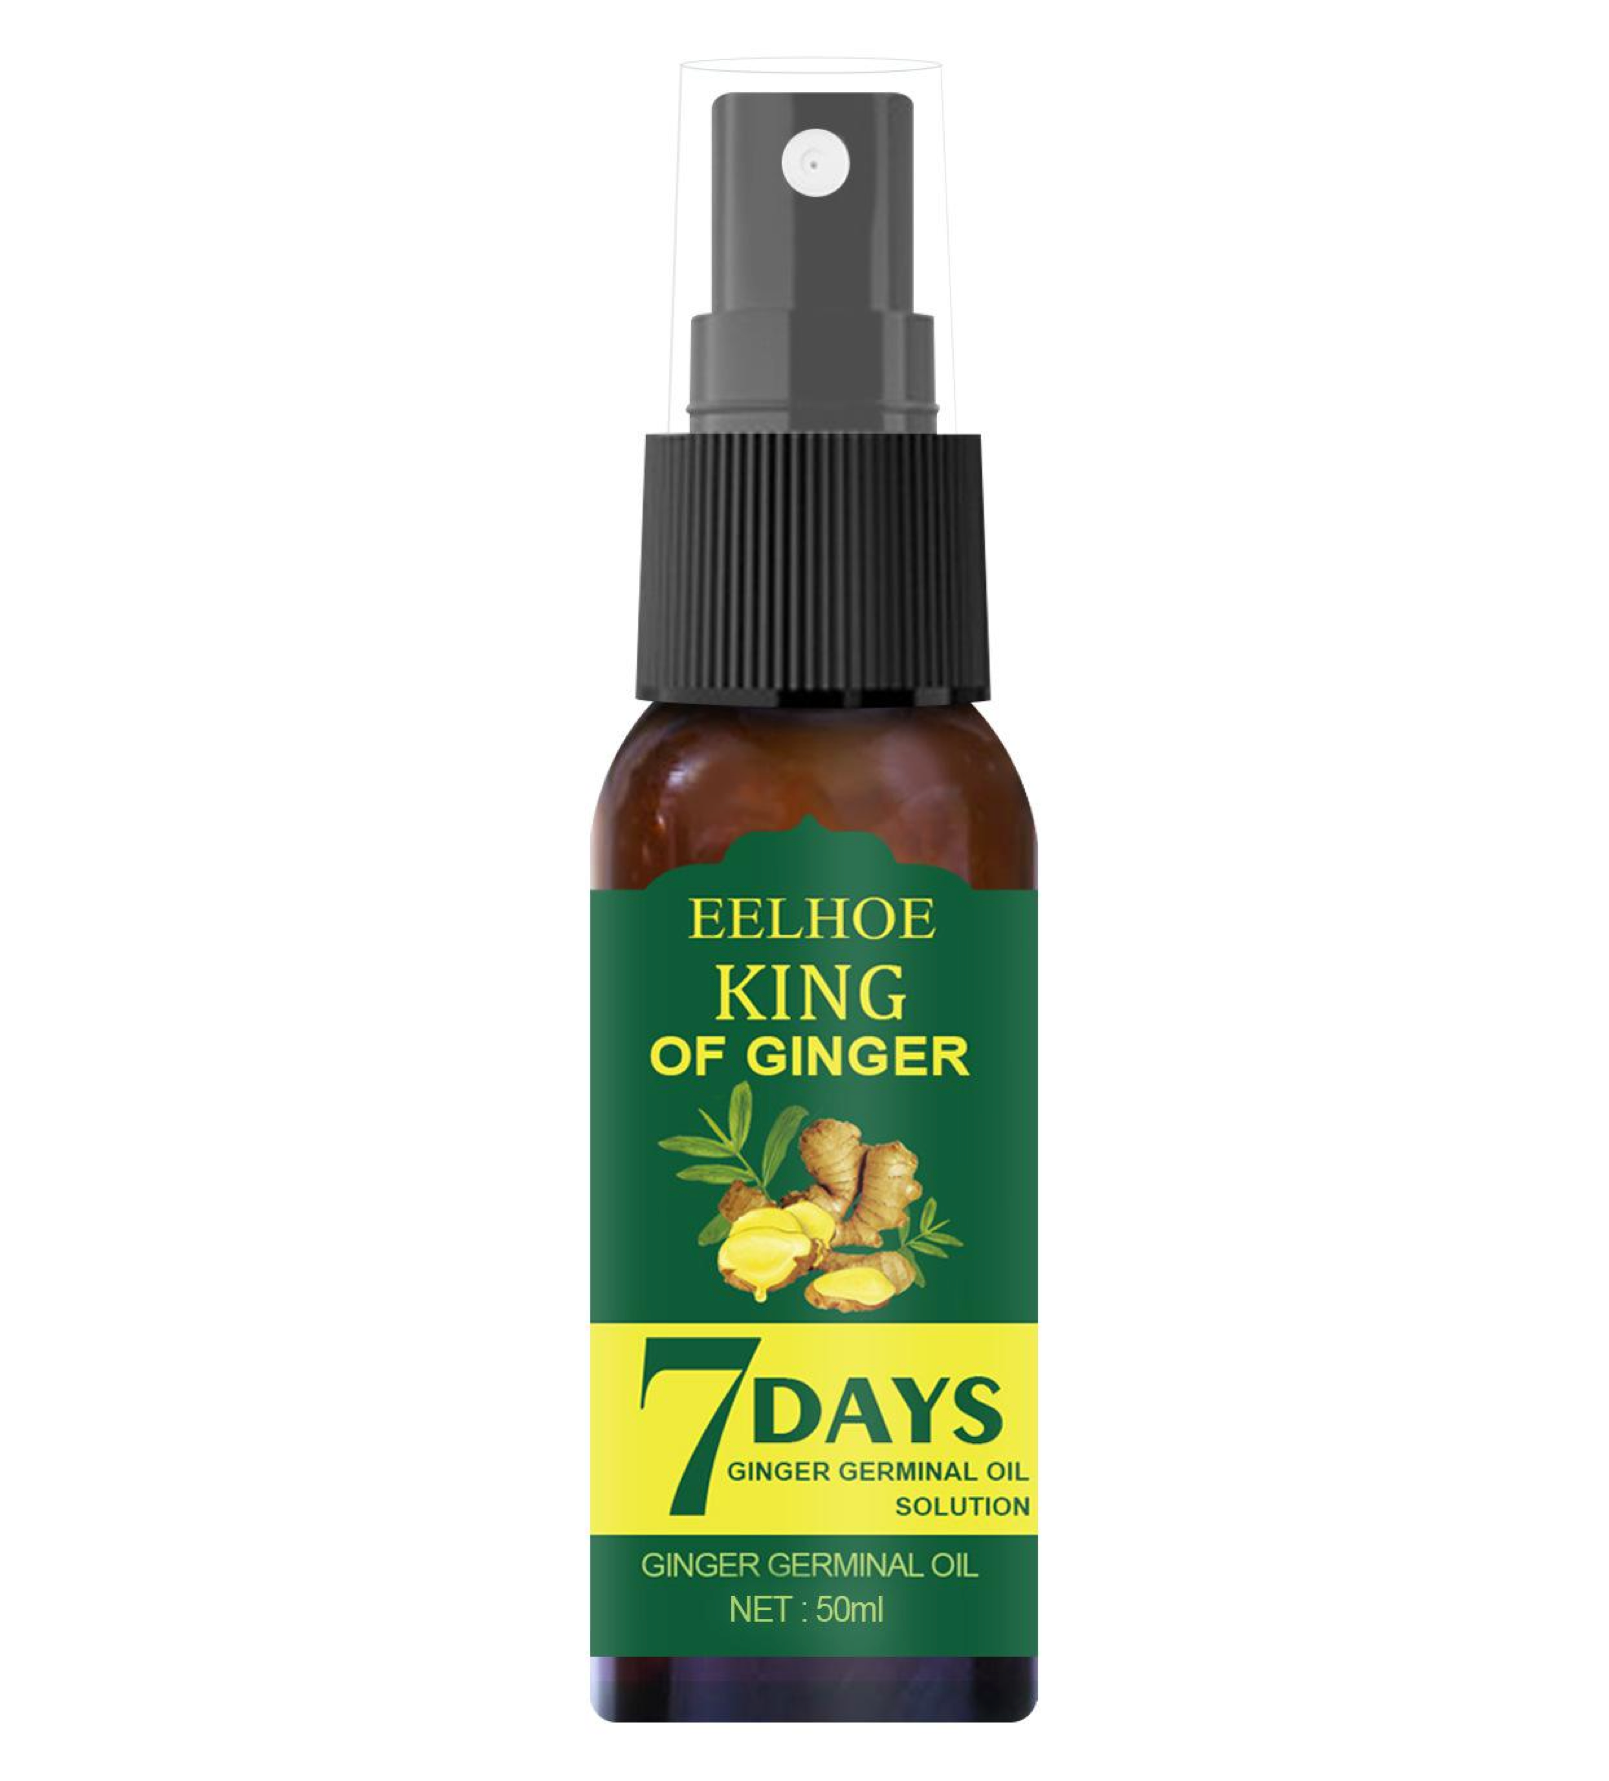 Eelhoe King Of Ginger 7 Days Hair Growth Oil 50ml